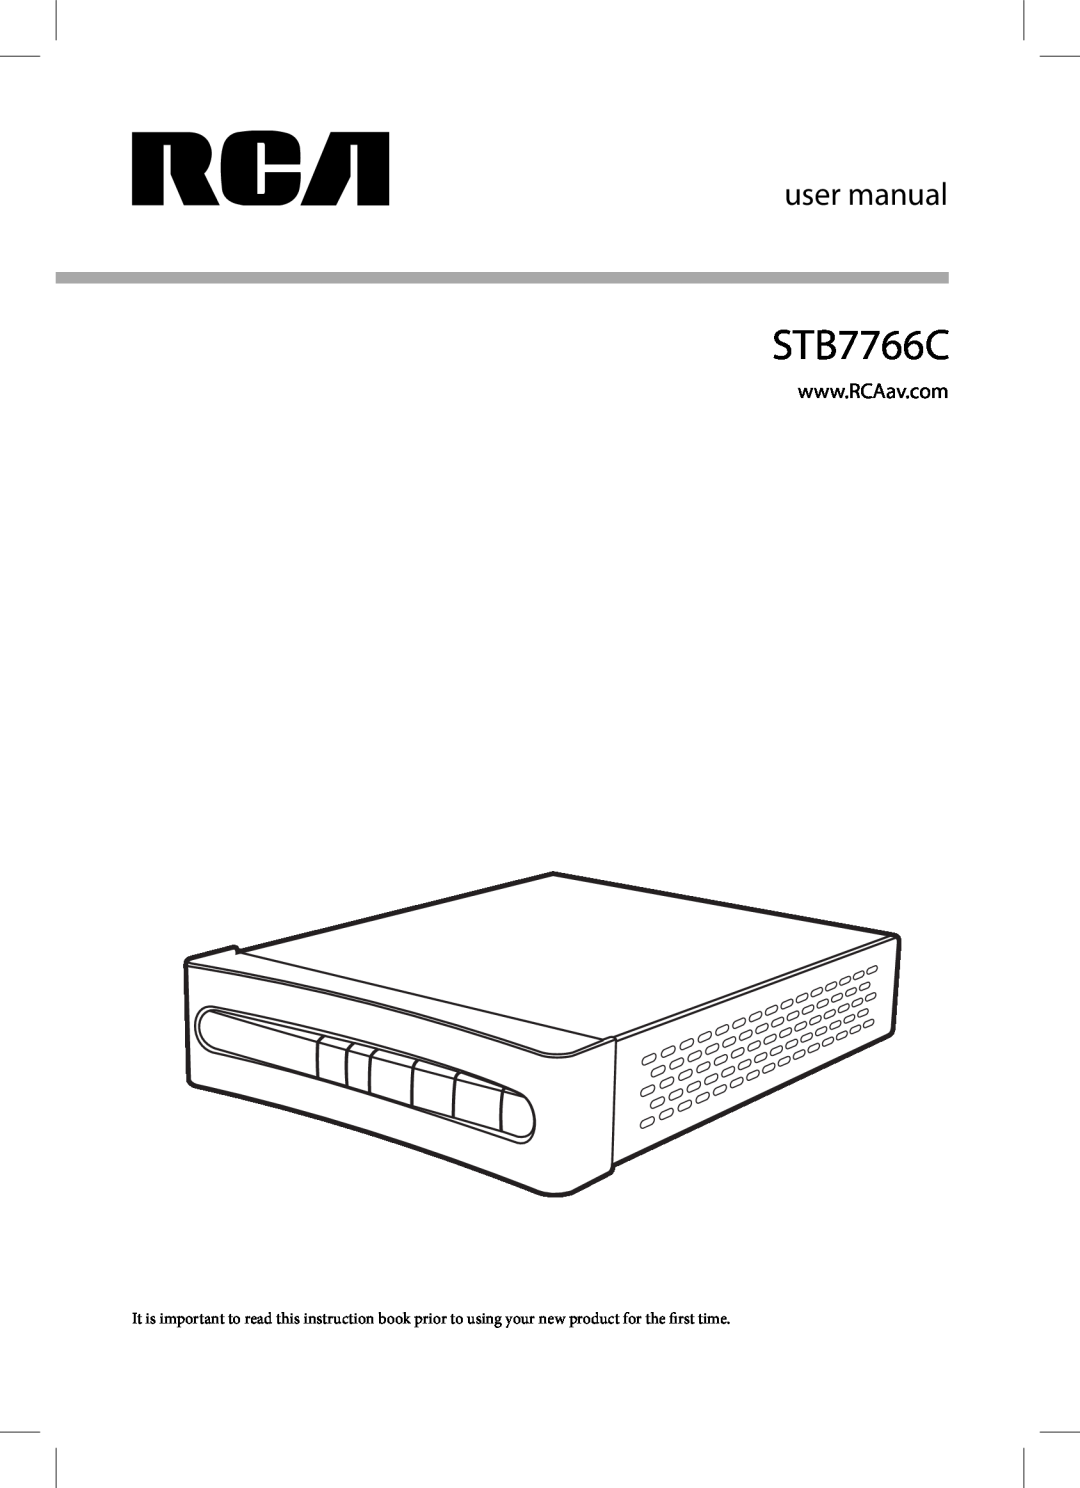 RCA STB7766C user manual 